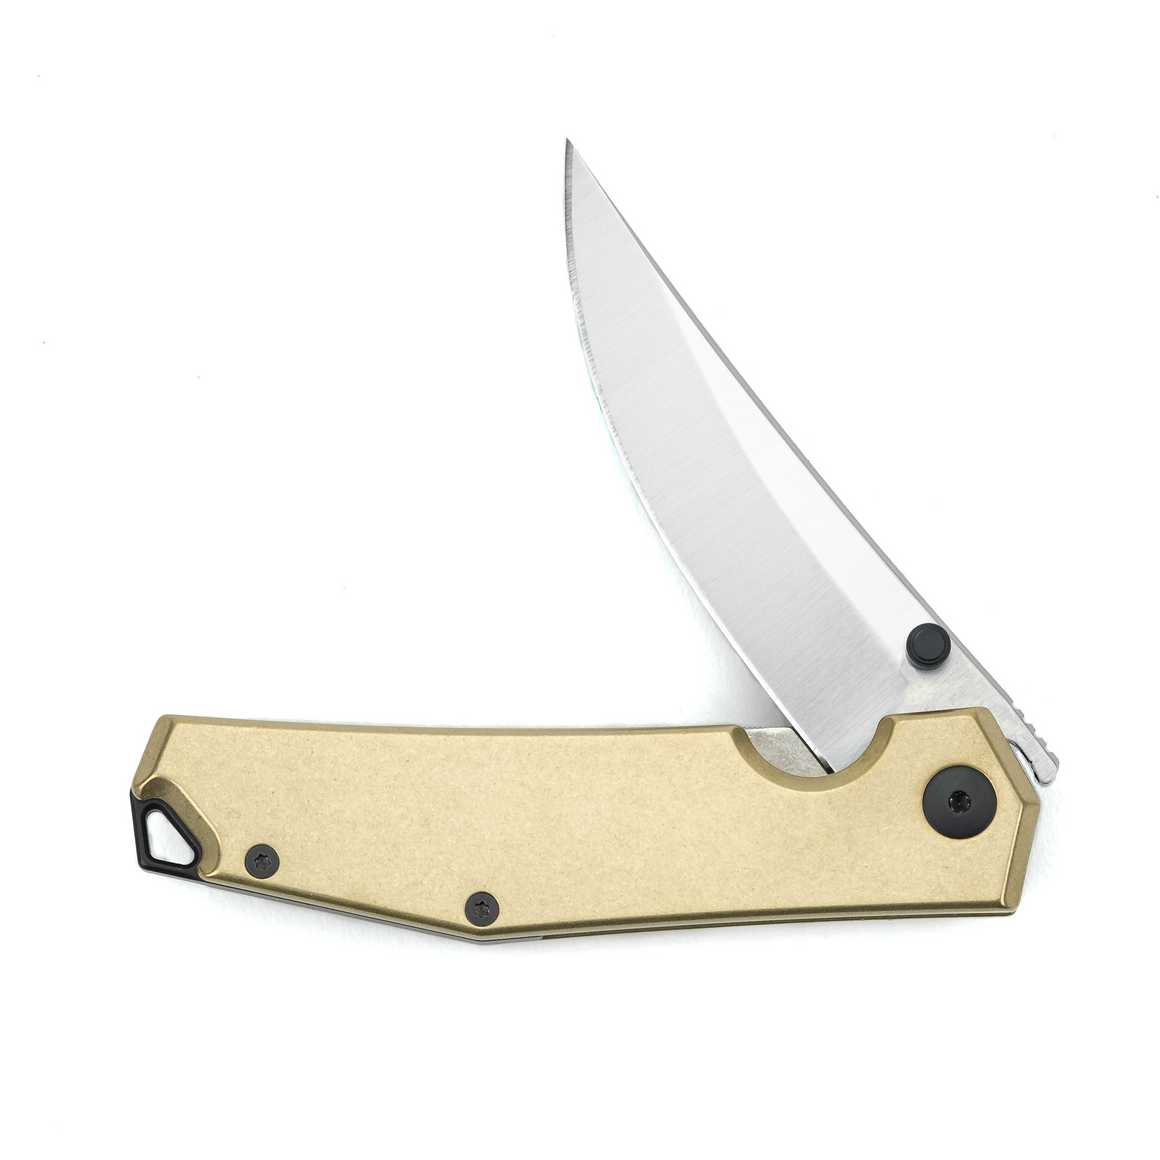 ACE Clyde - Brass EDC knife M390 Blade Steel -  Satin finish - Brass Handle - semi-open